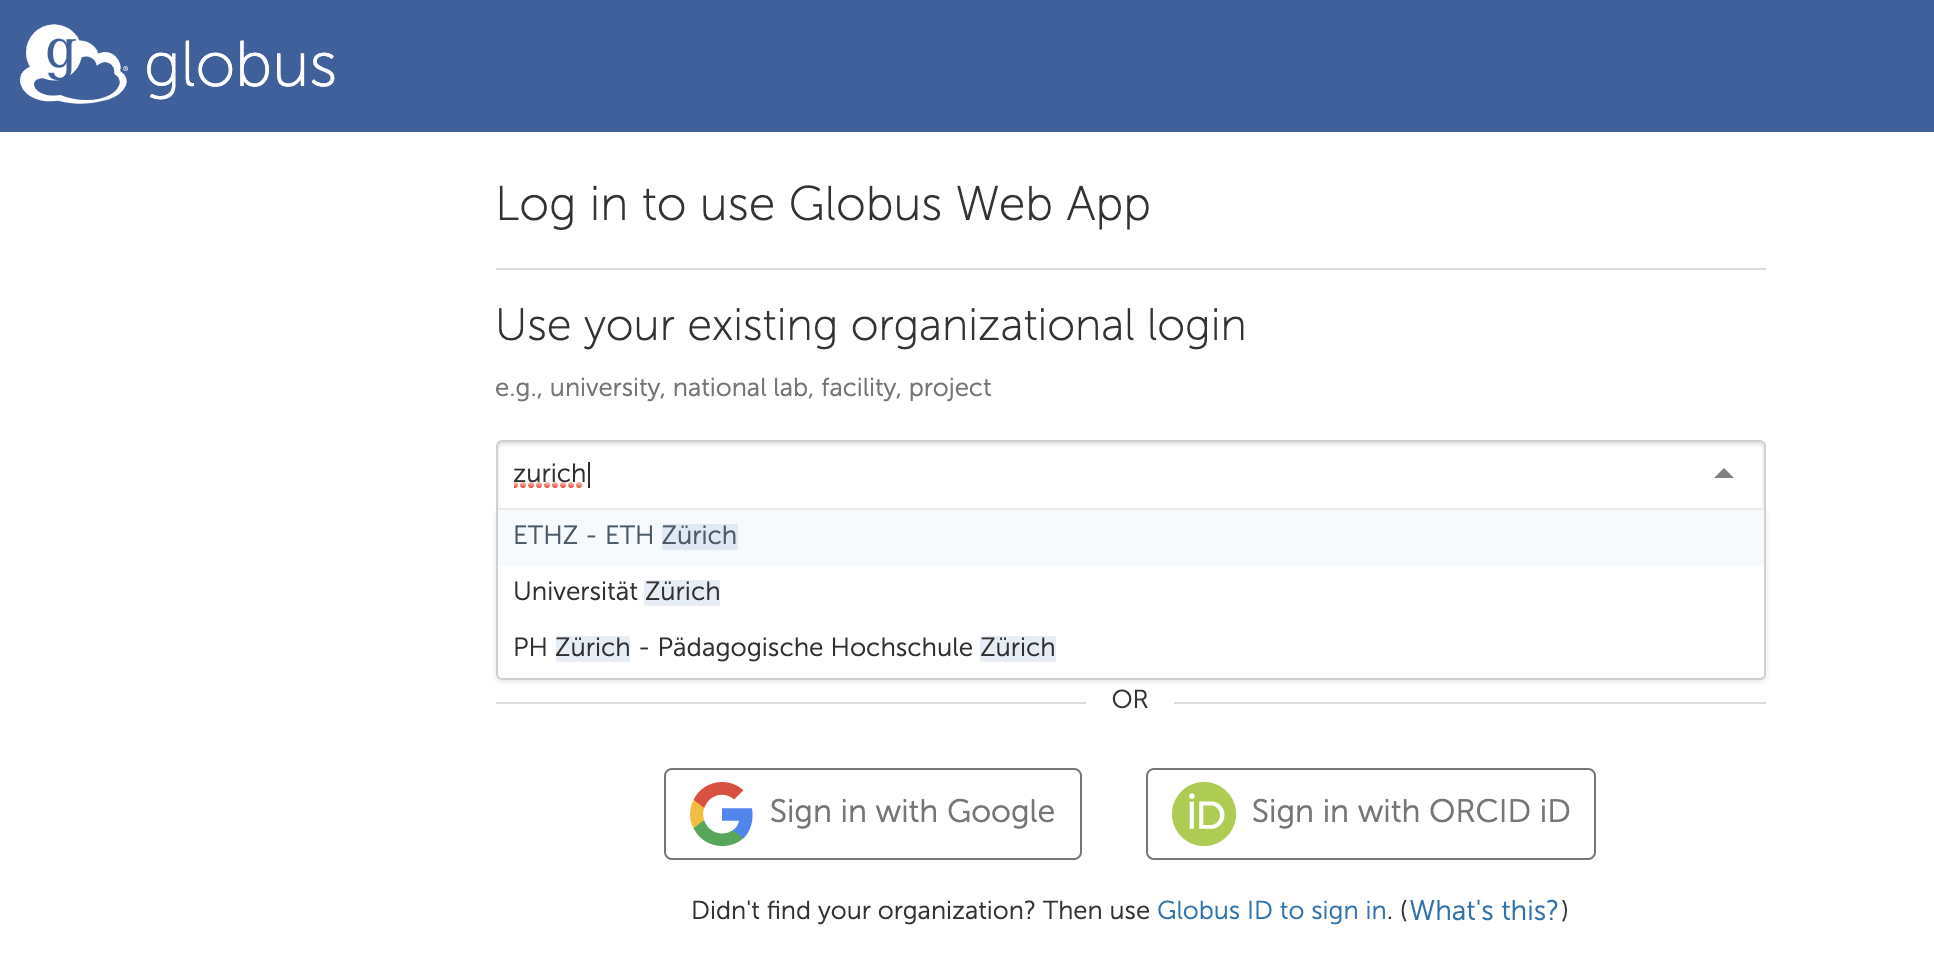 globus_organizational_login